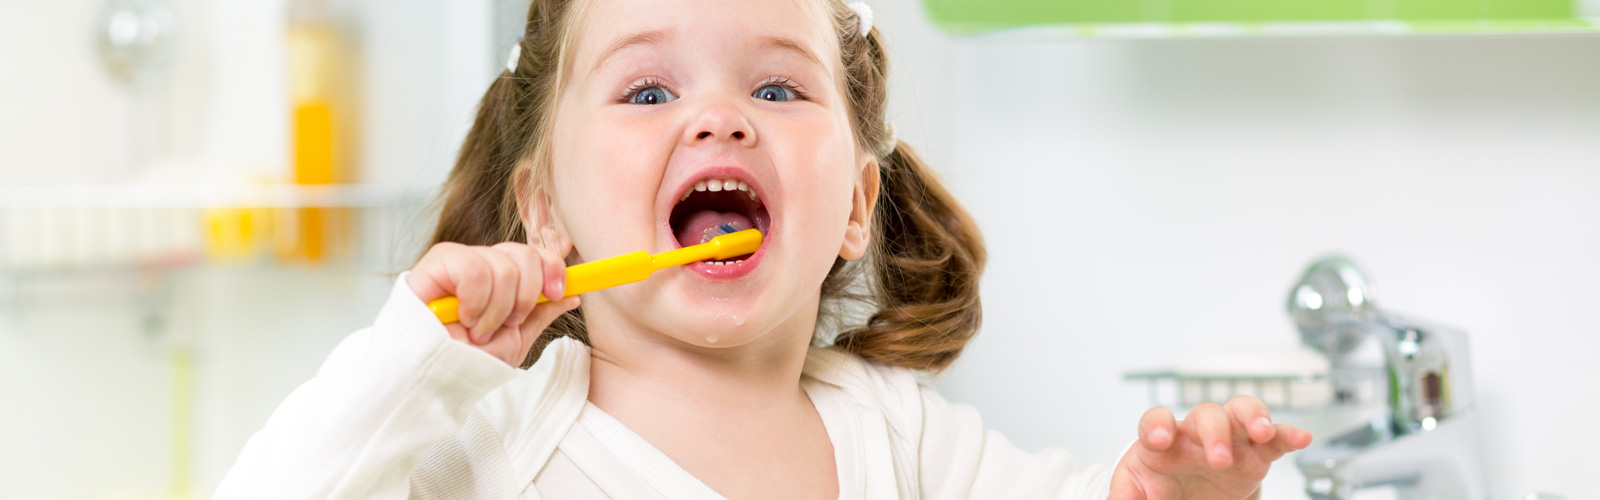 A little girl brushing her teeth